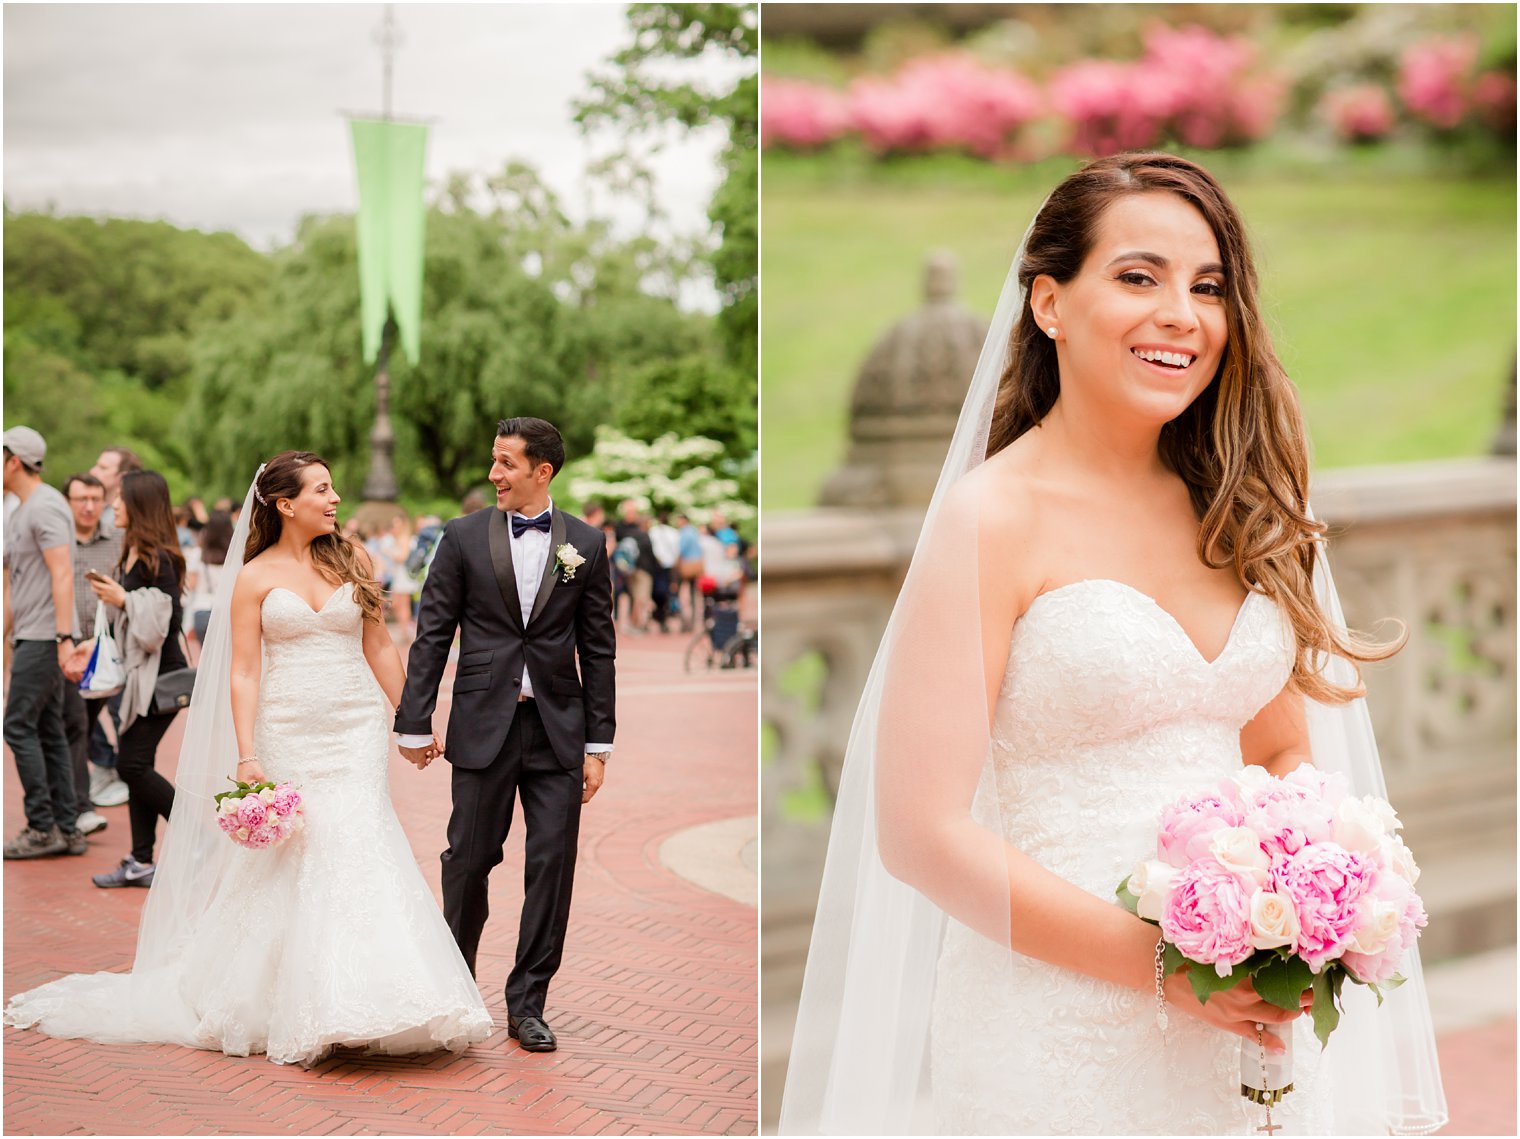 Wedding photos at Bethesda Fountain | Photo by Idalia Photography